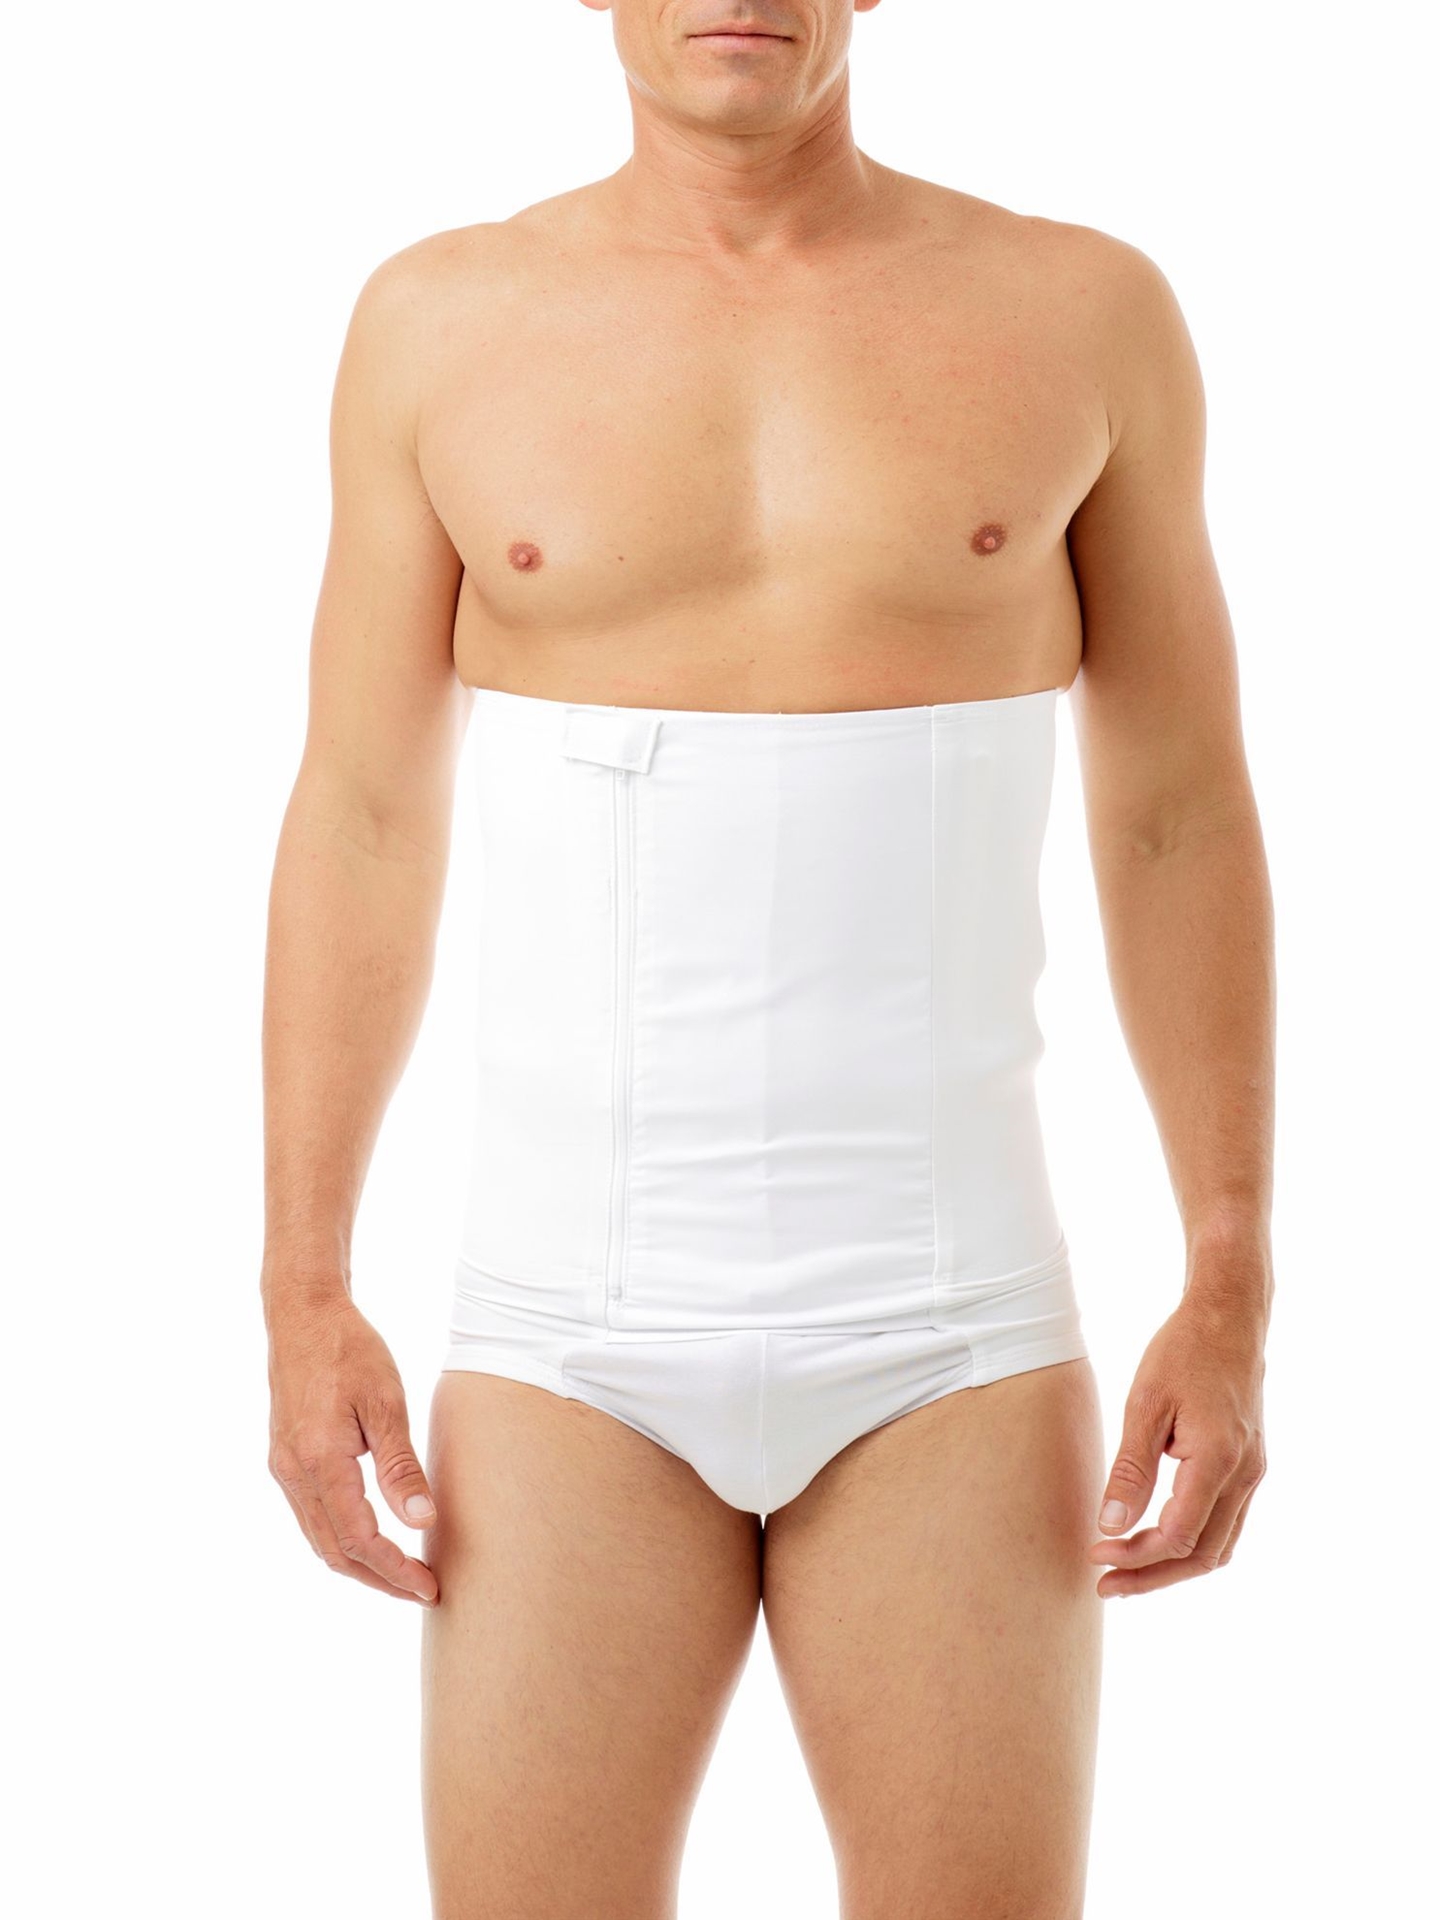 https://www.underworks.com/images/thumbs/0000217_12-inch-belly-buster-zip-n-trim-mens-compression-underwear.jpeg